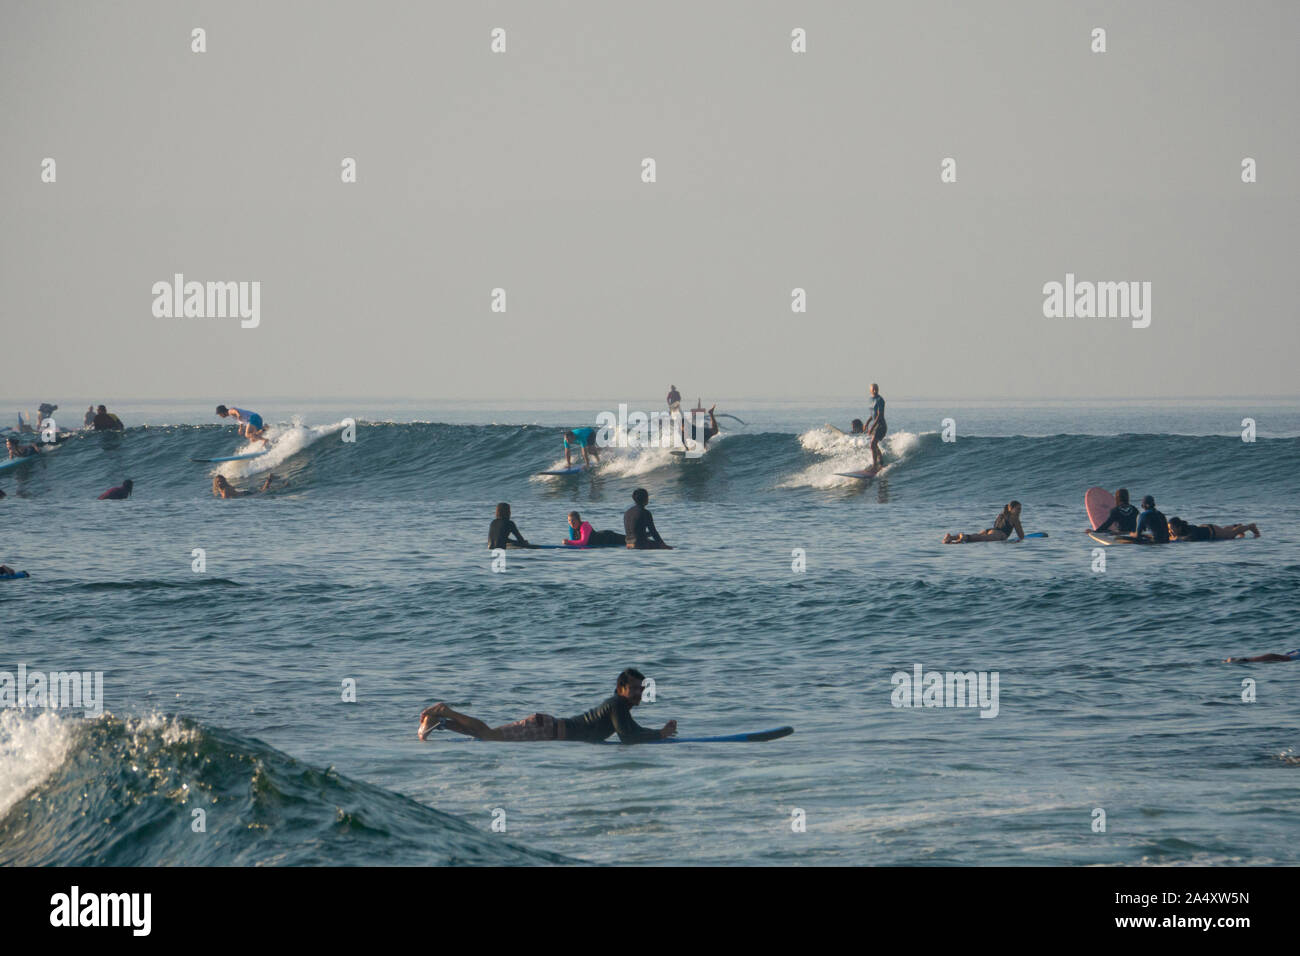 Men and women surfing at Canggu beach in Bali, Indonesia Stock Photo